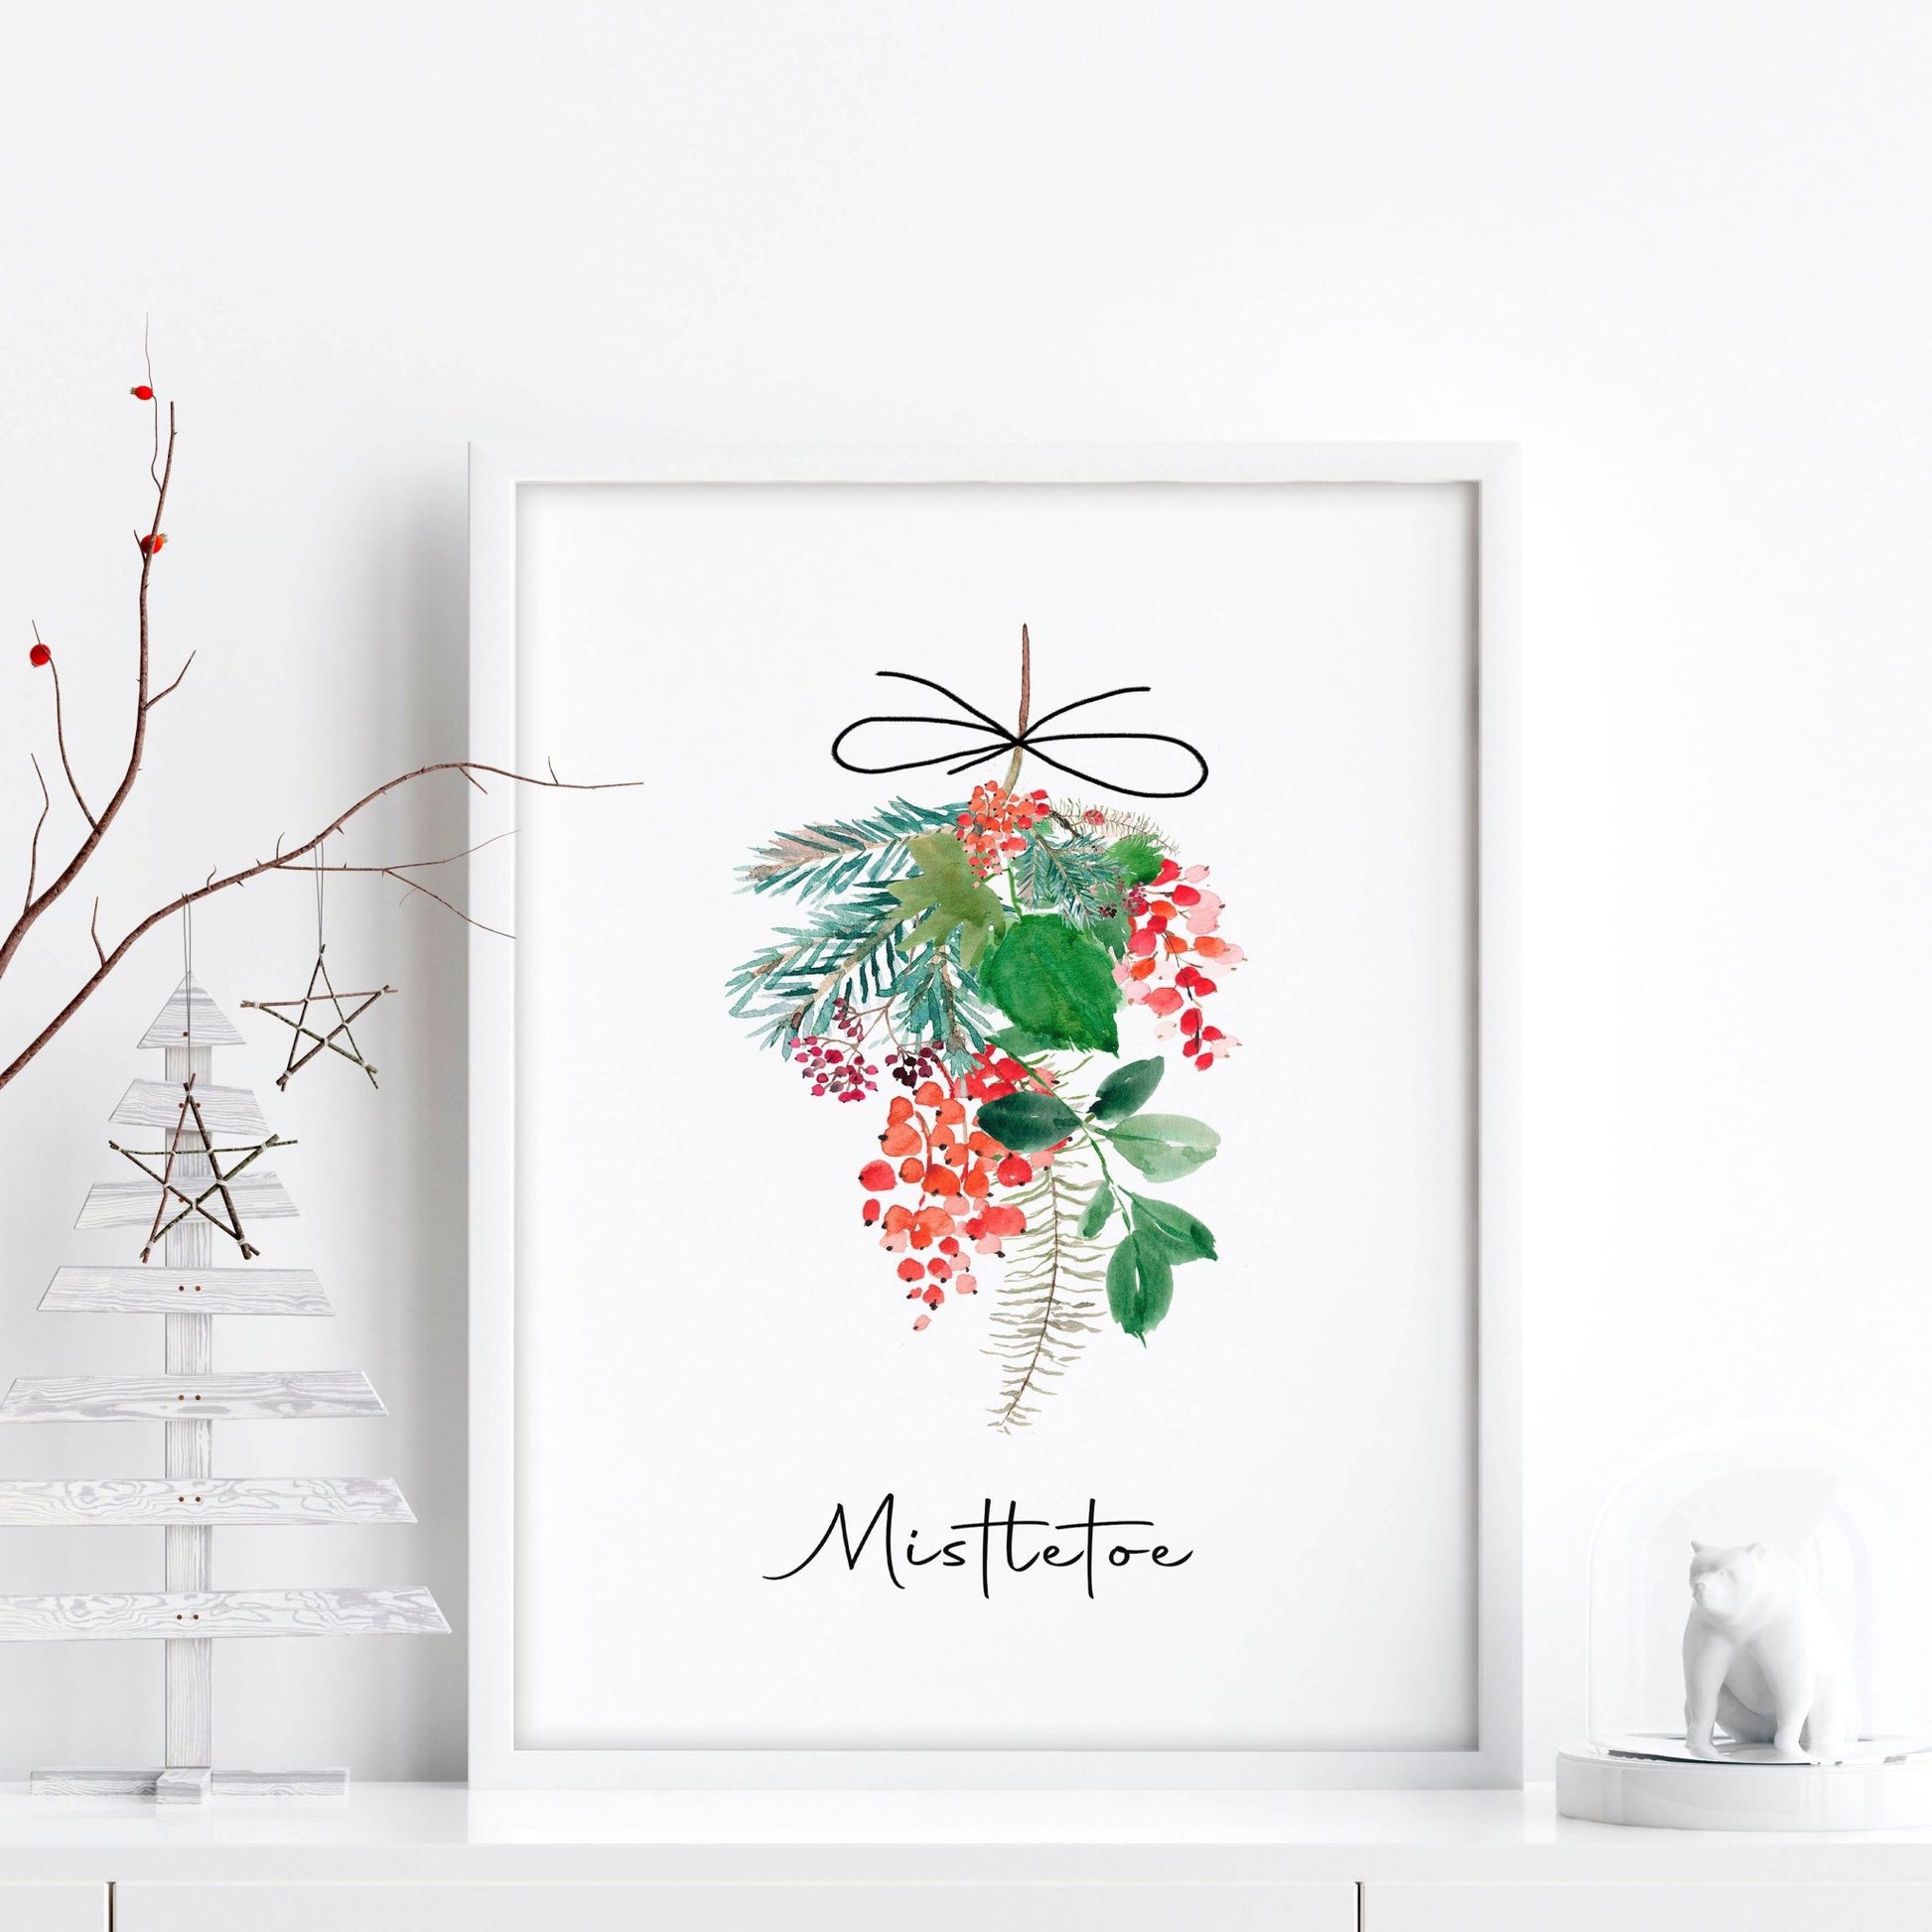 Christmas wall decorations indoor | Mistletoe wall art print